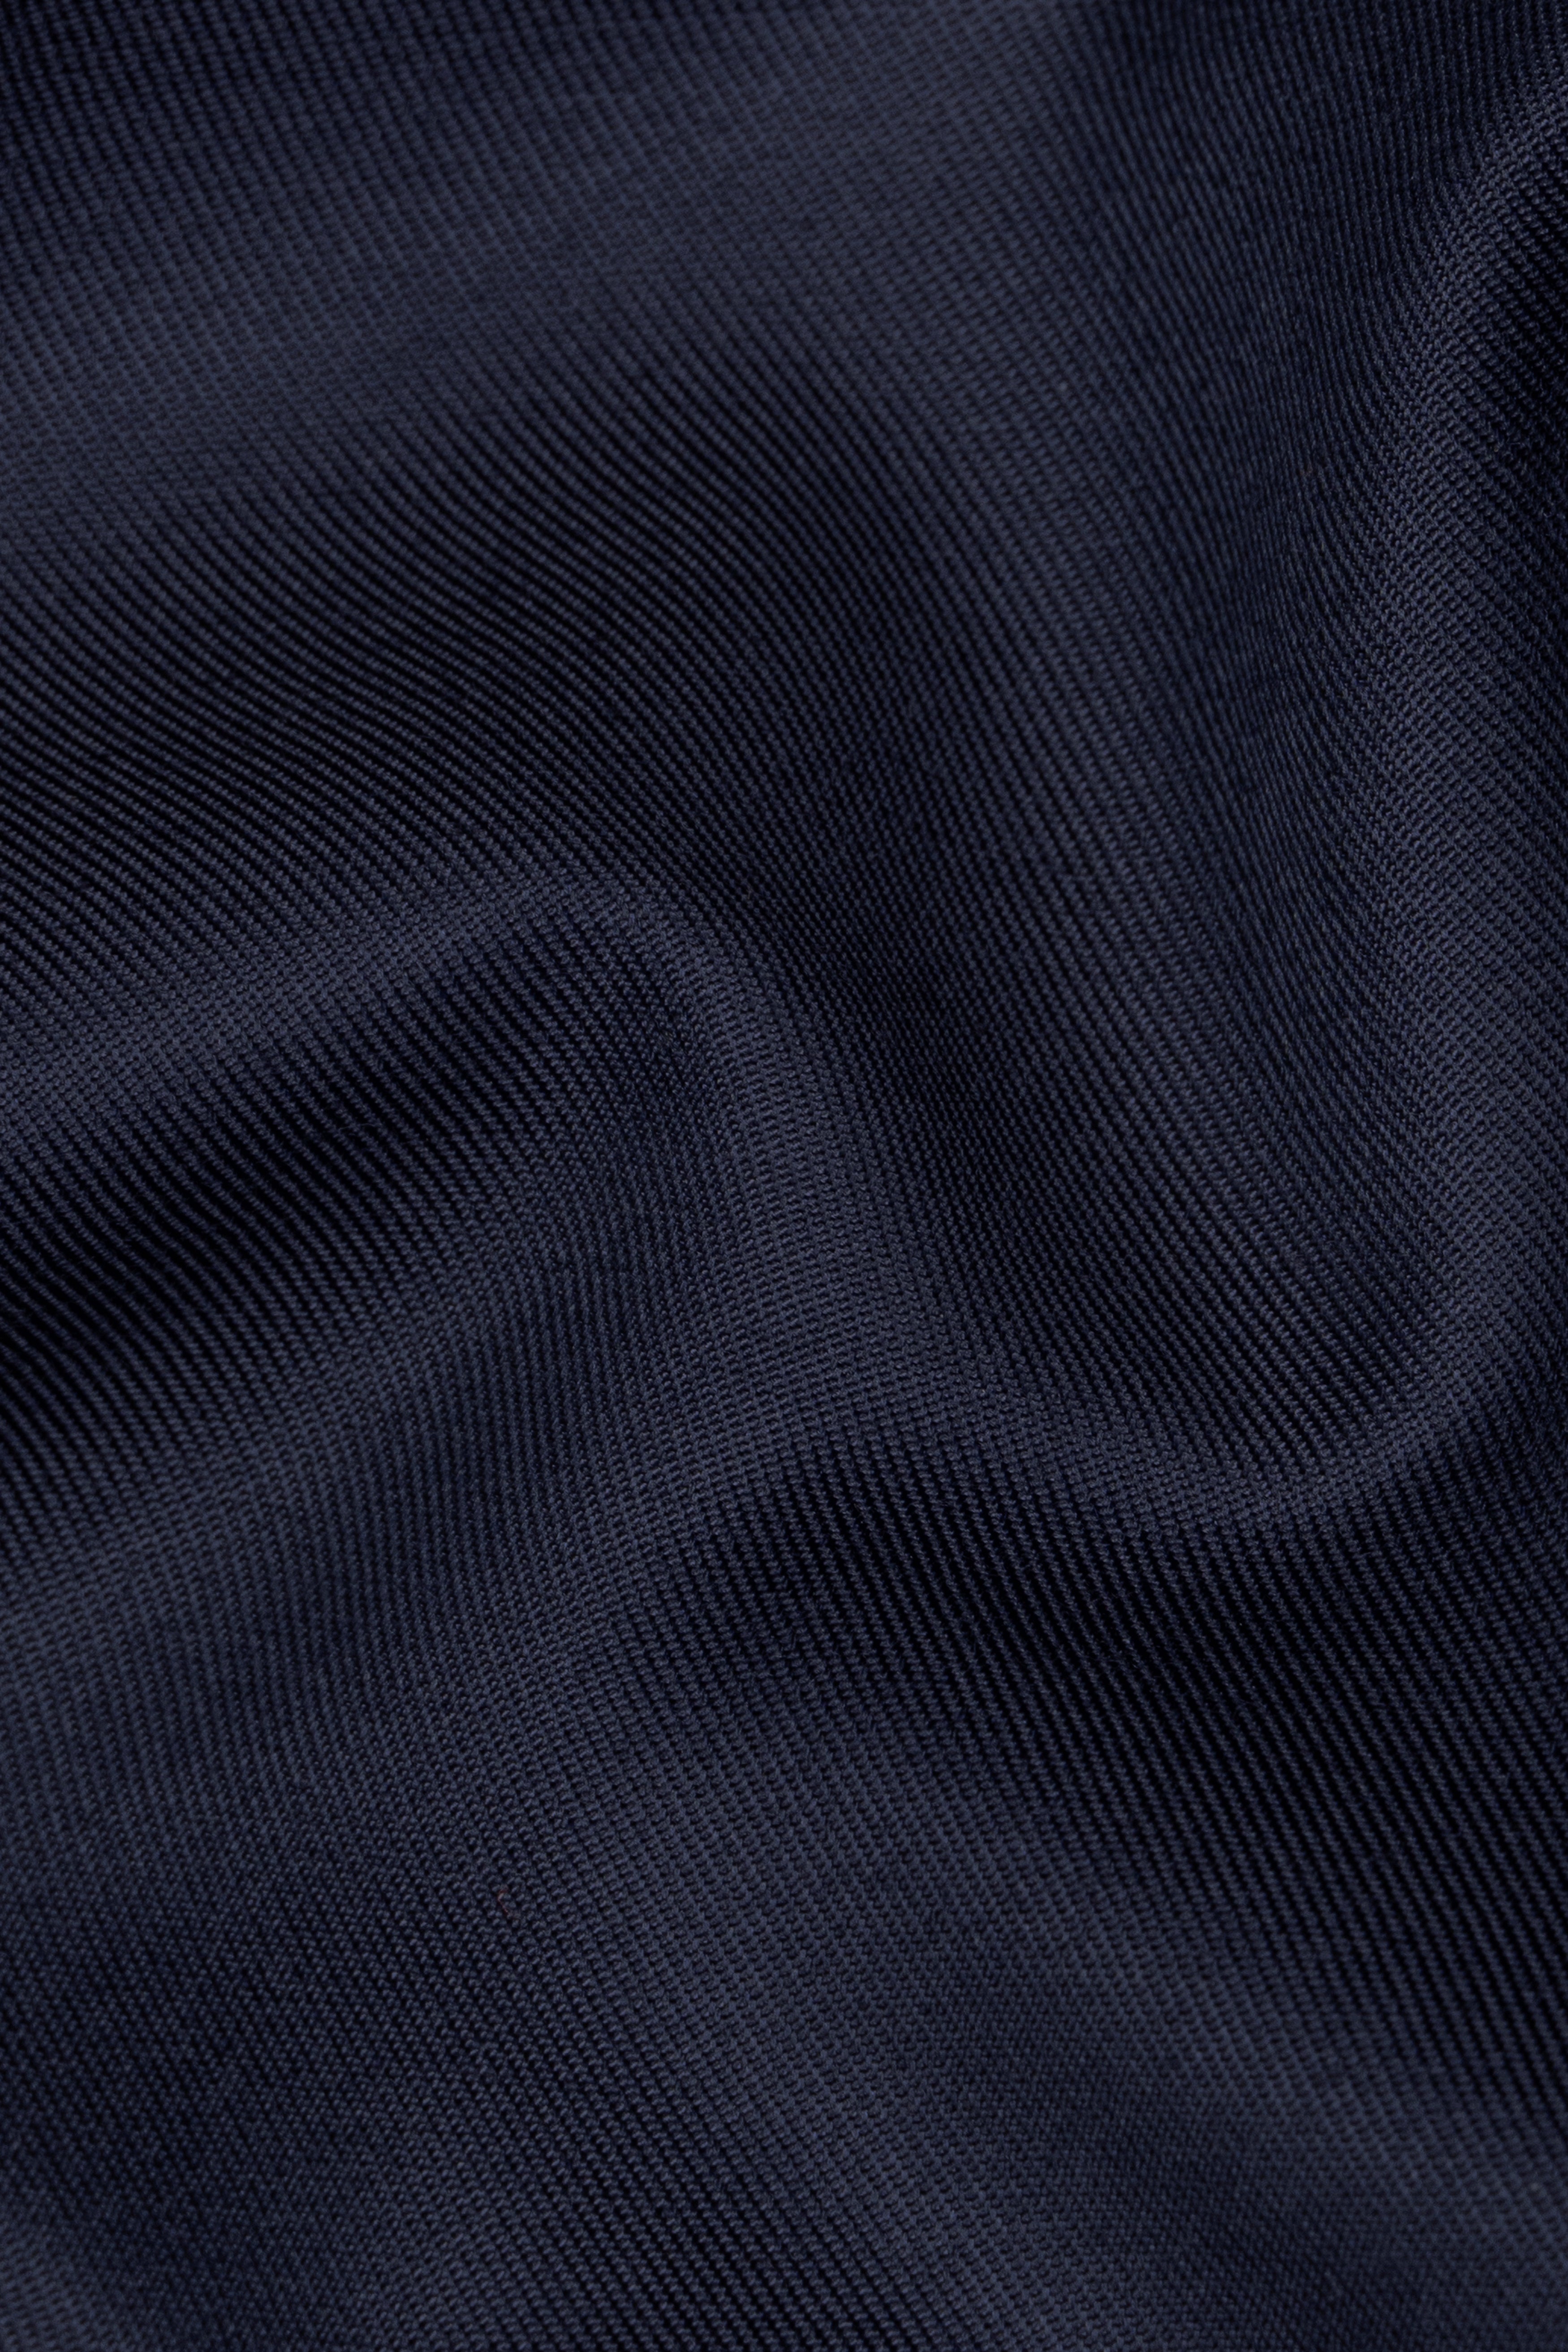 Vulcan Blue Plain Solid Wool Blend Suit